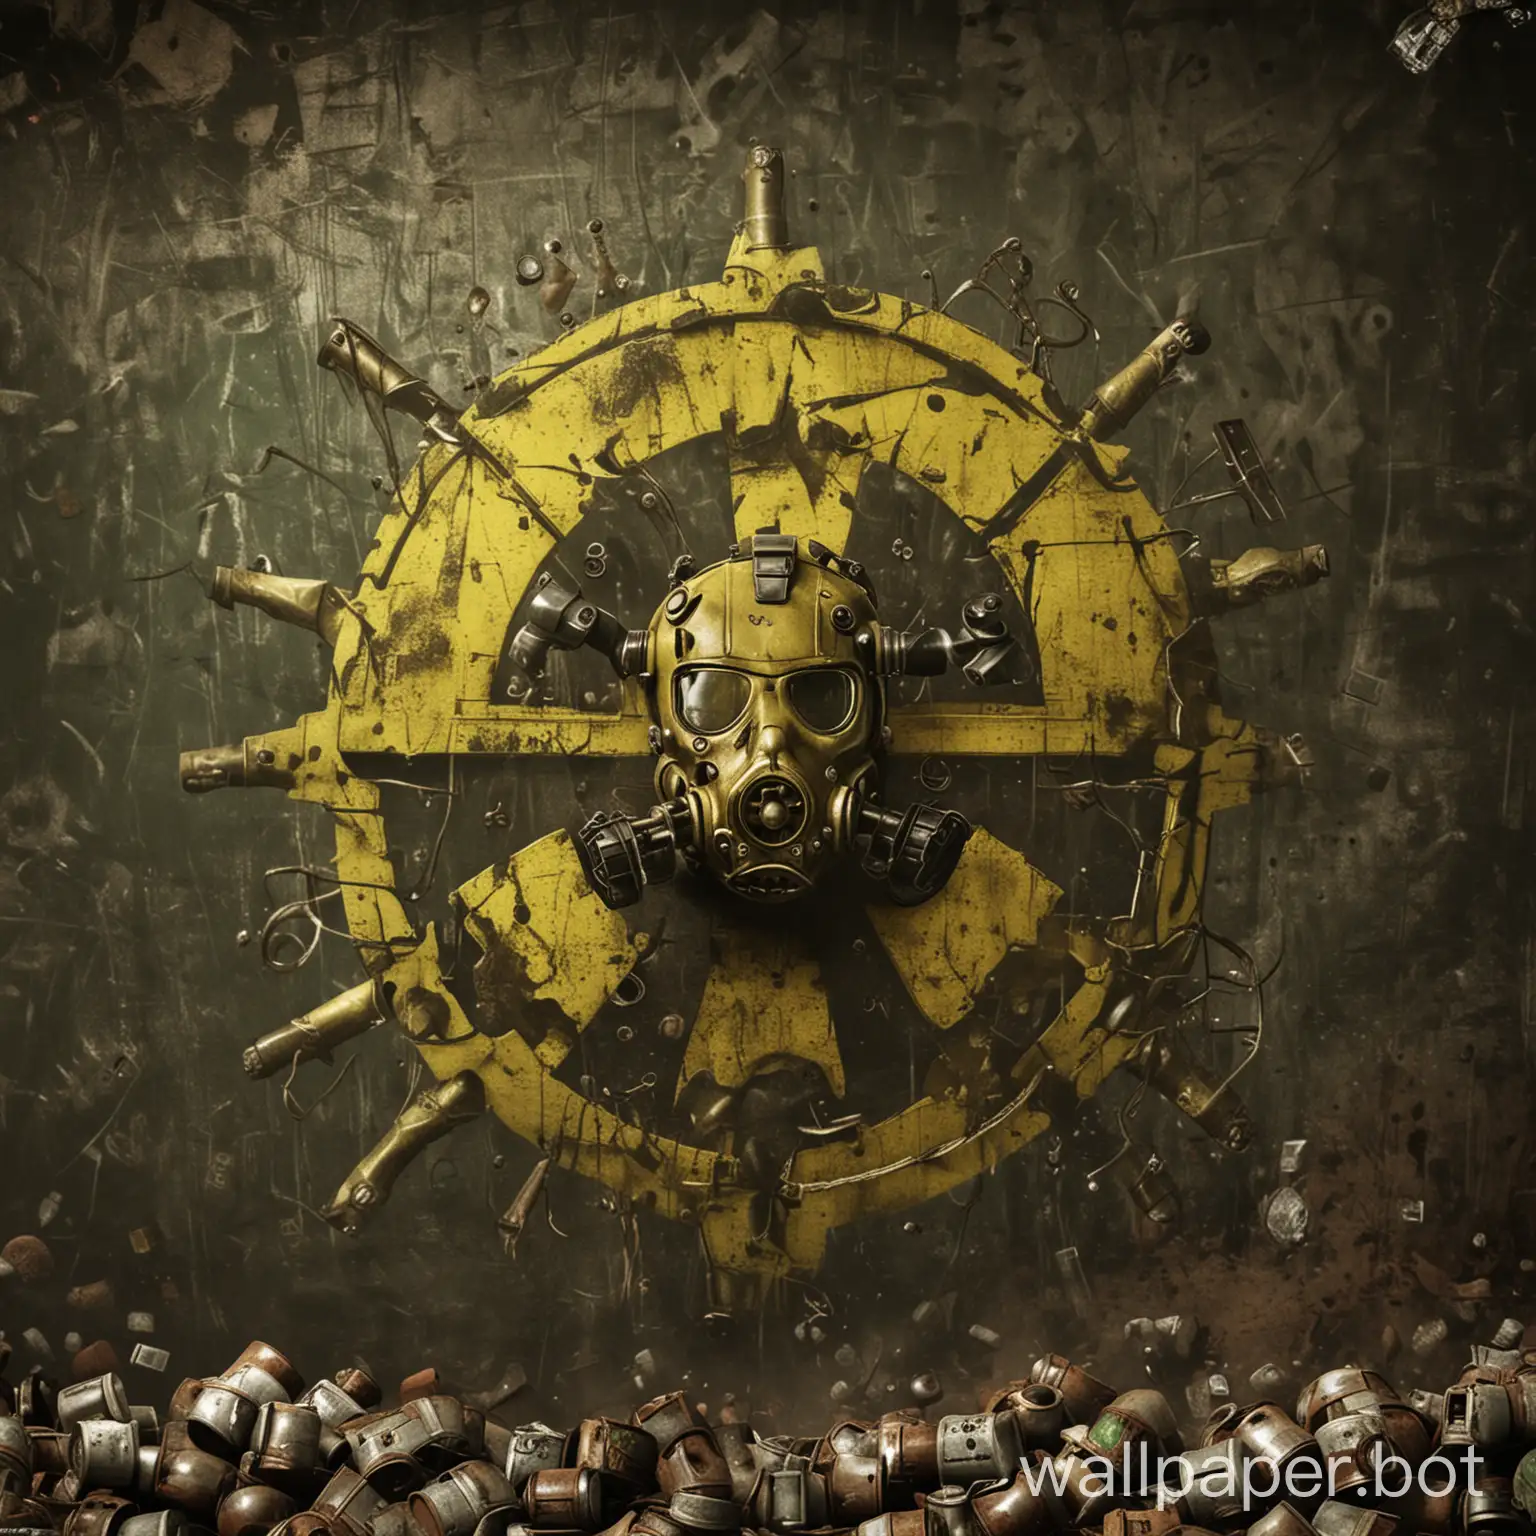 Fallout 4 wallpaper with radioactive materials